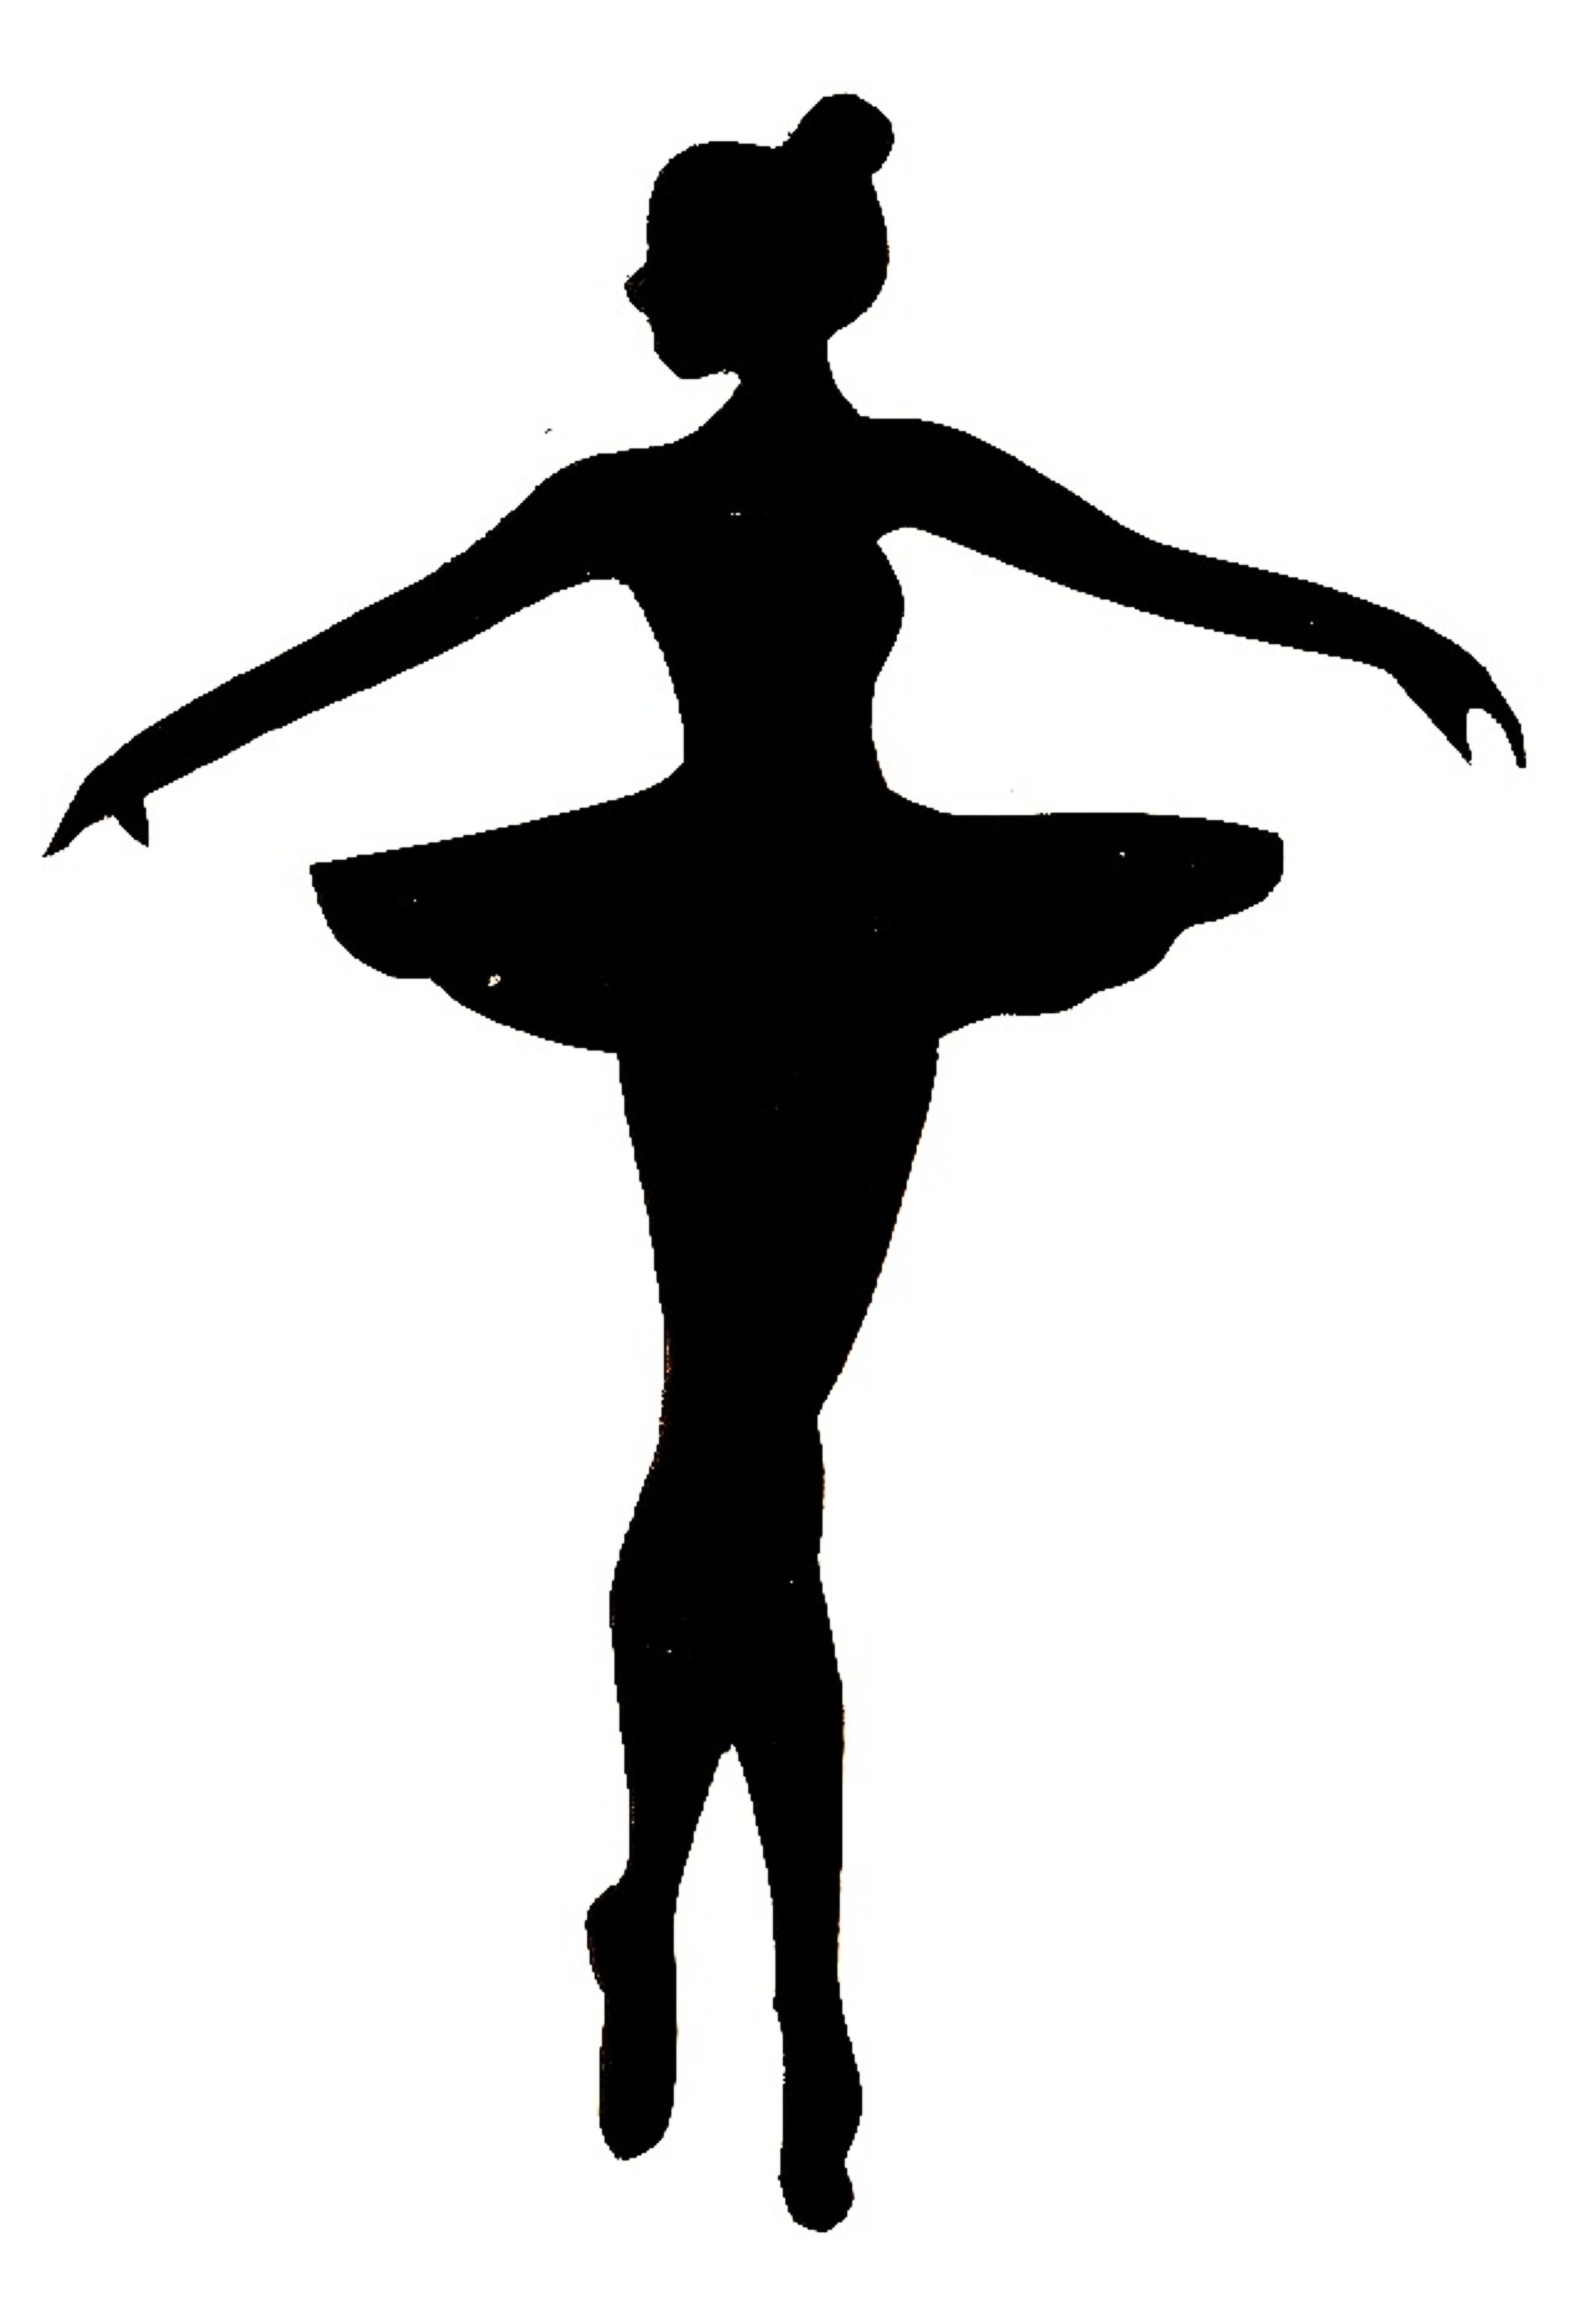 dancer clipart black and white